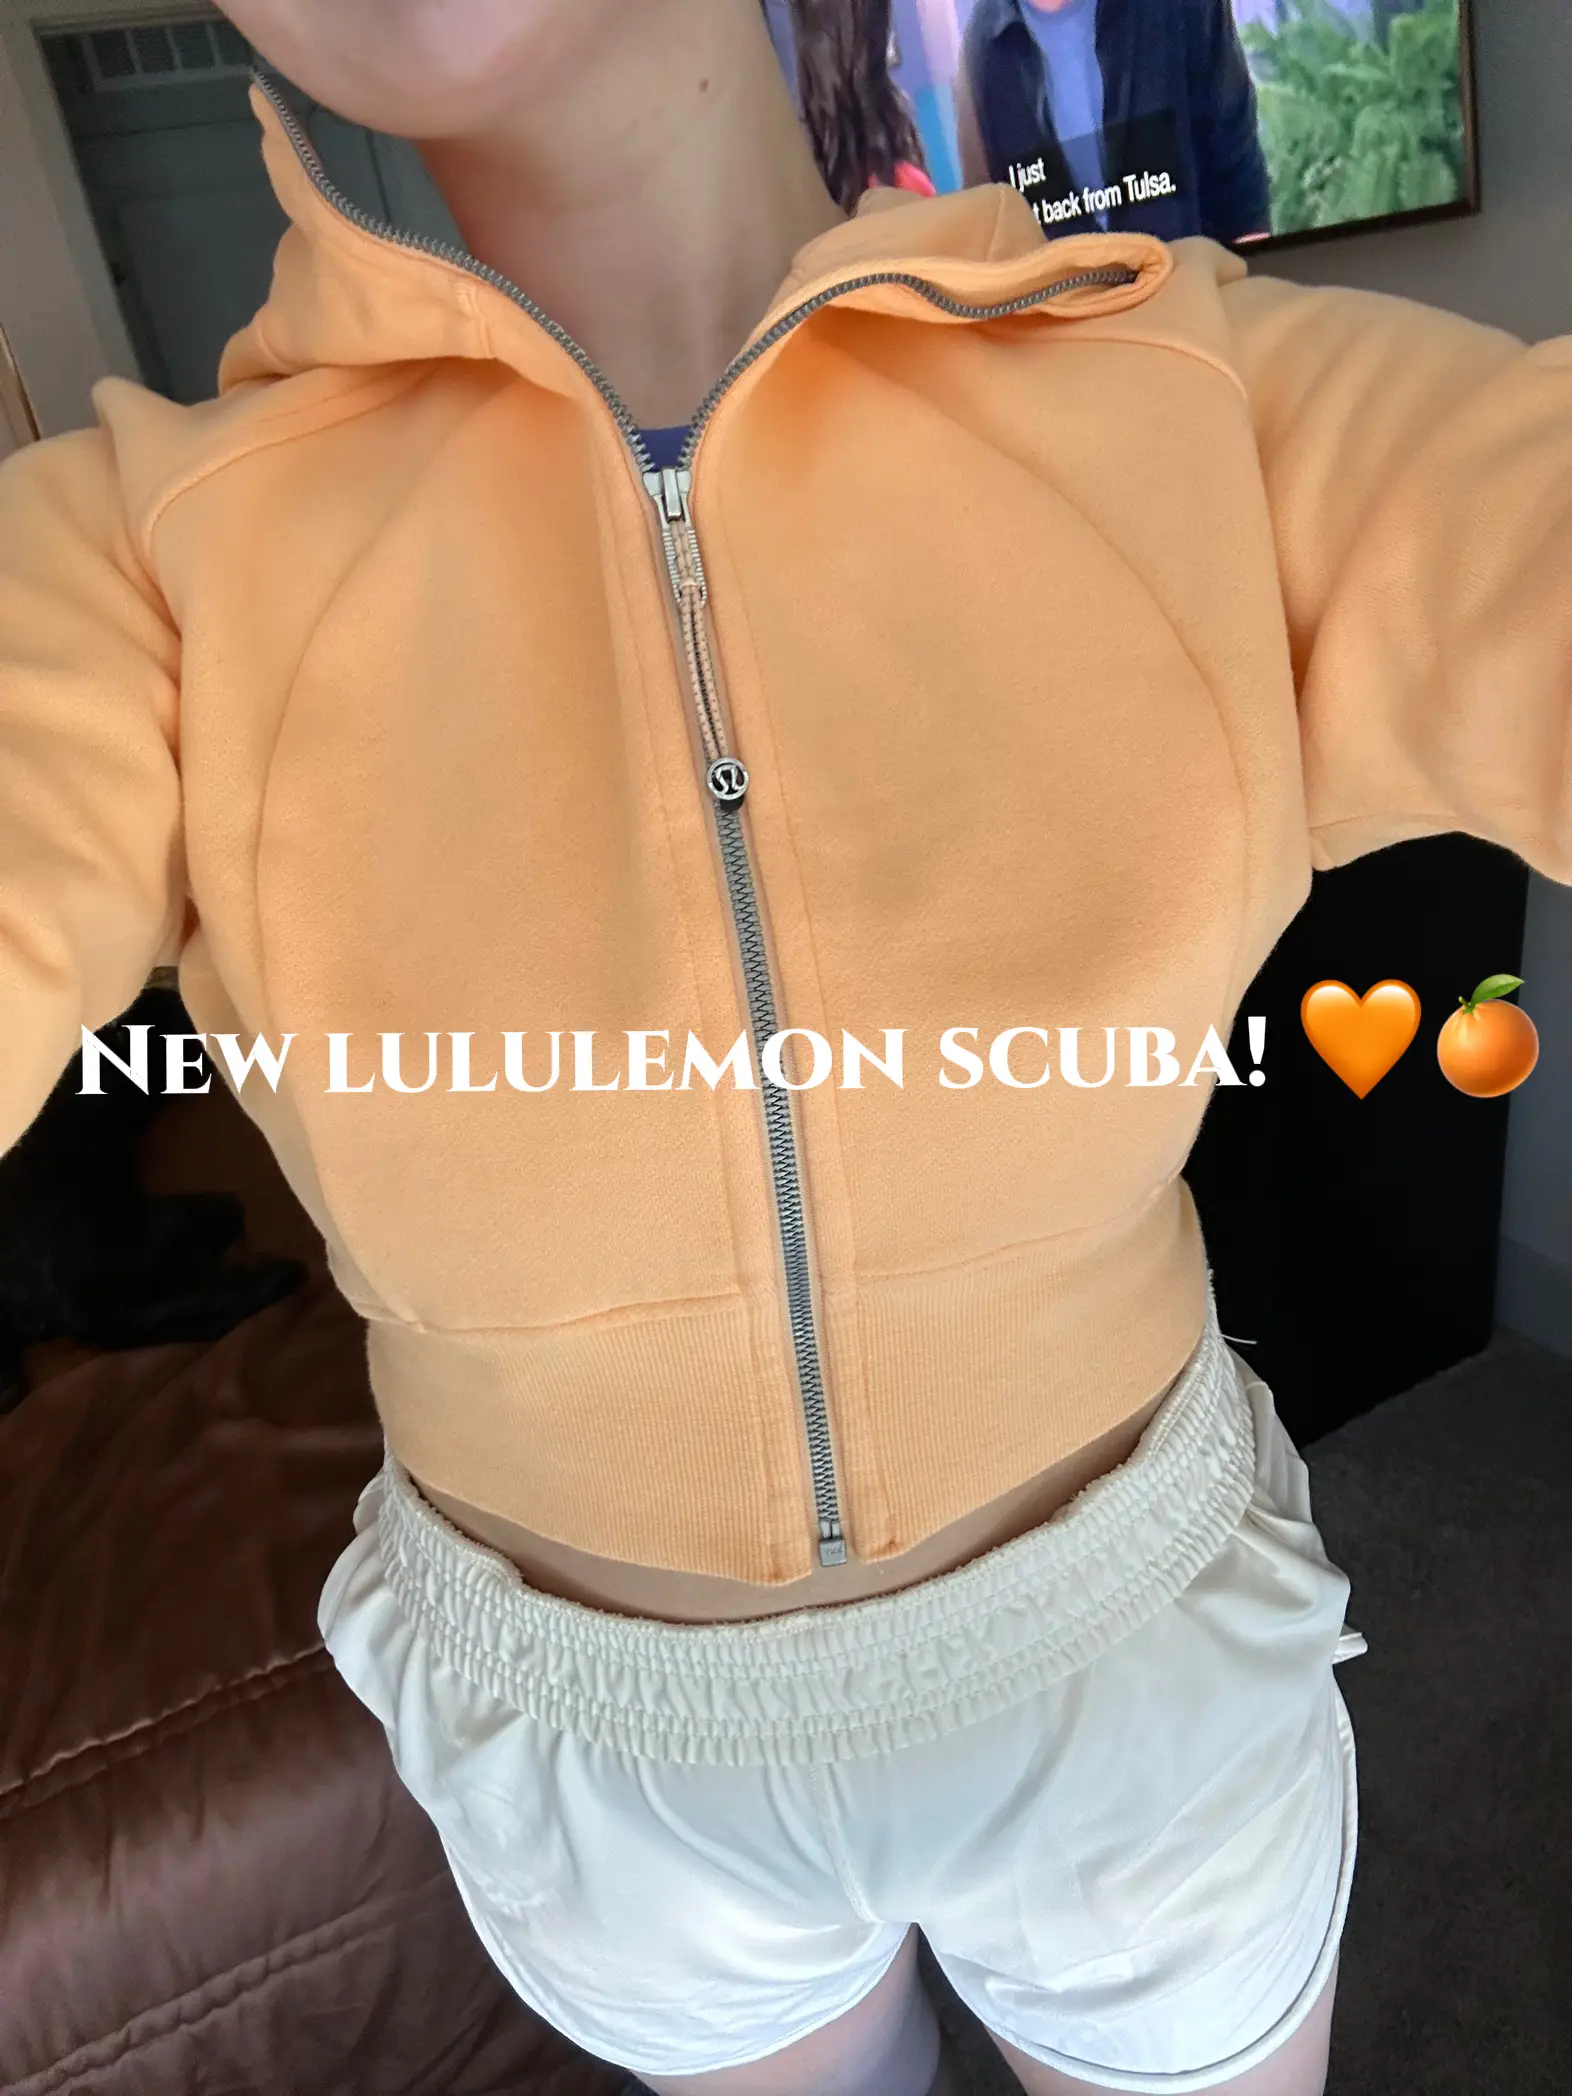 lululemon Hoodie Scuba, New lululemon Shorts and More